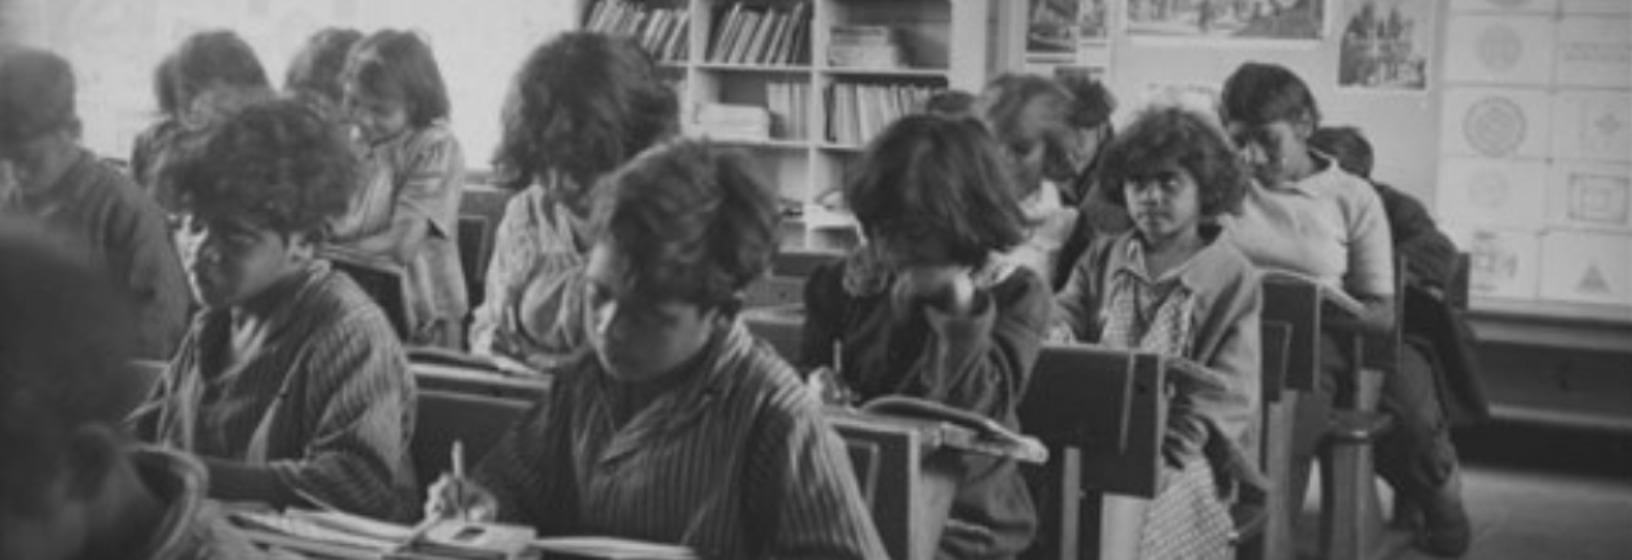 aboriginal children sitting in the classroom